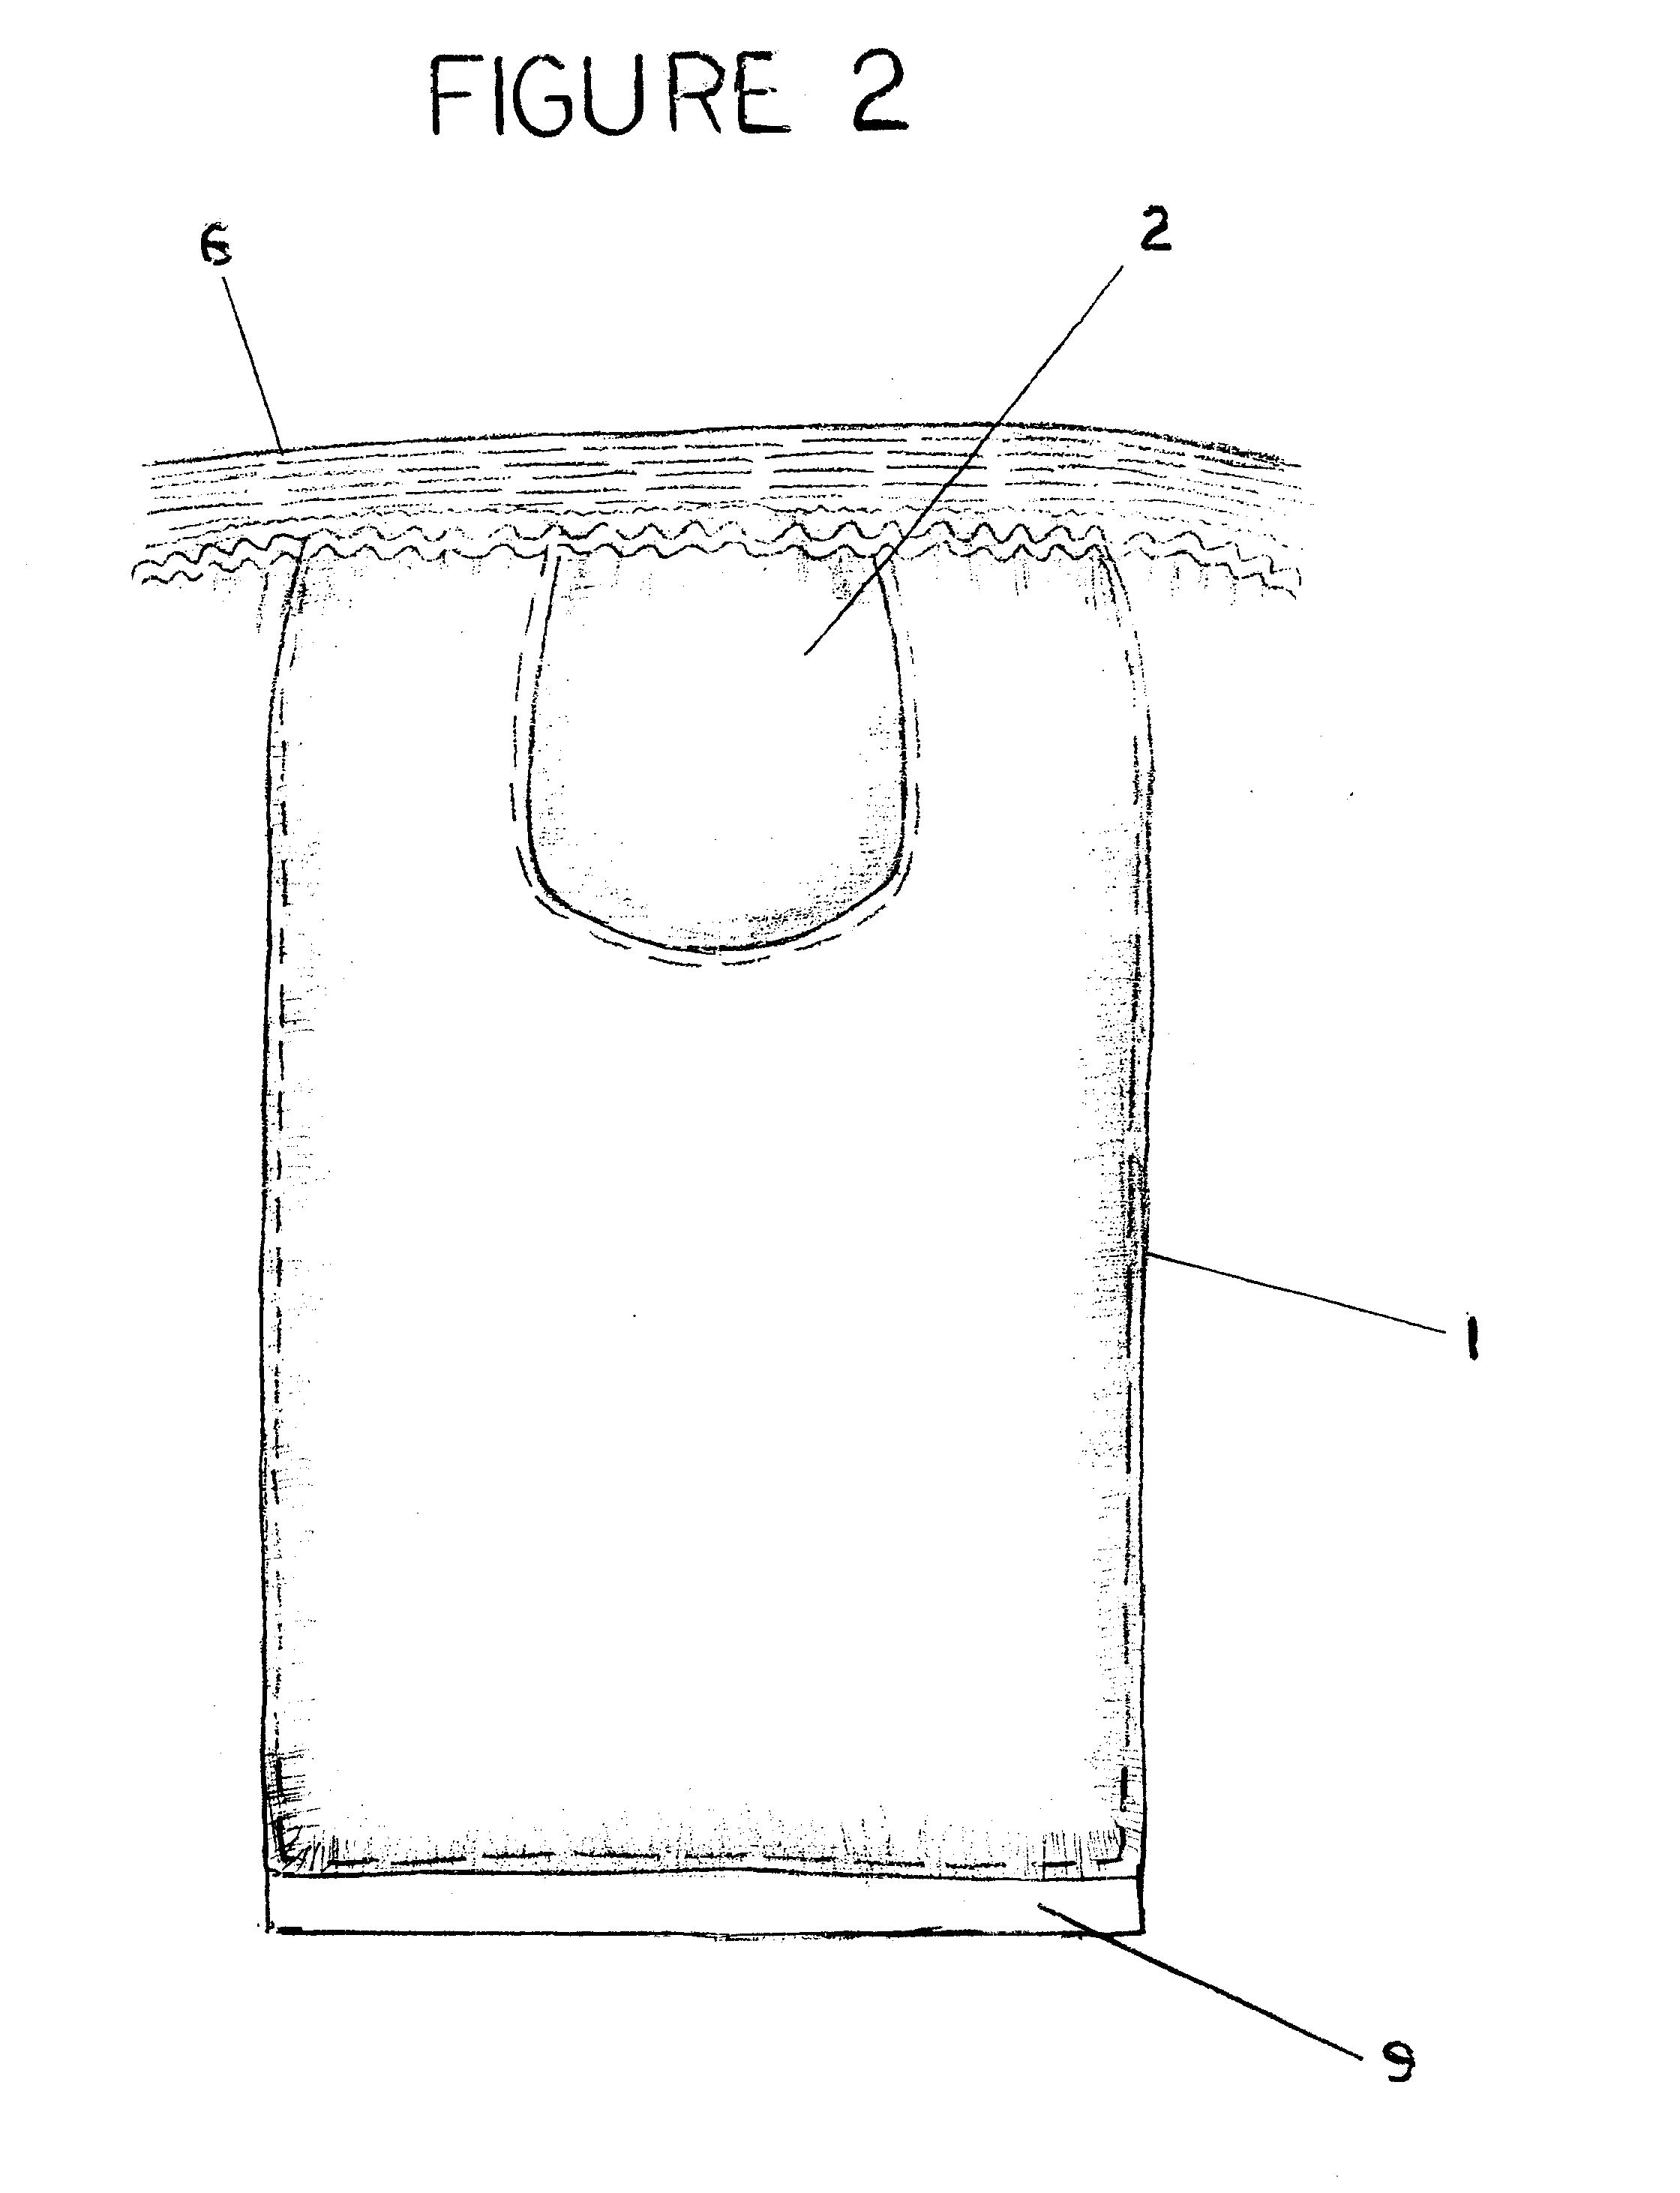 Ostomy bag undergarment